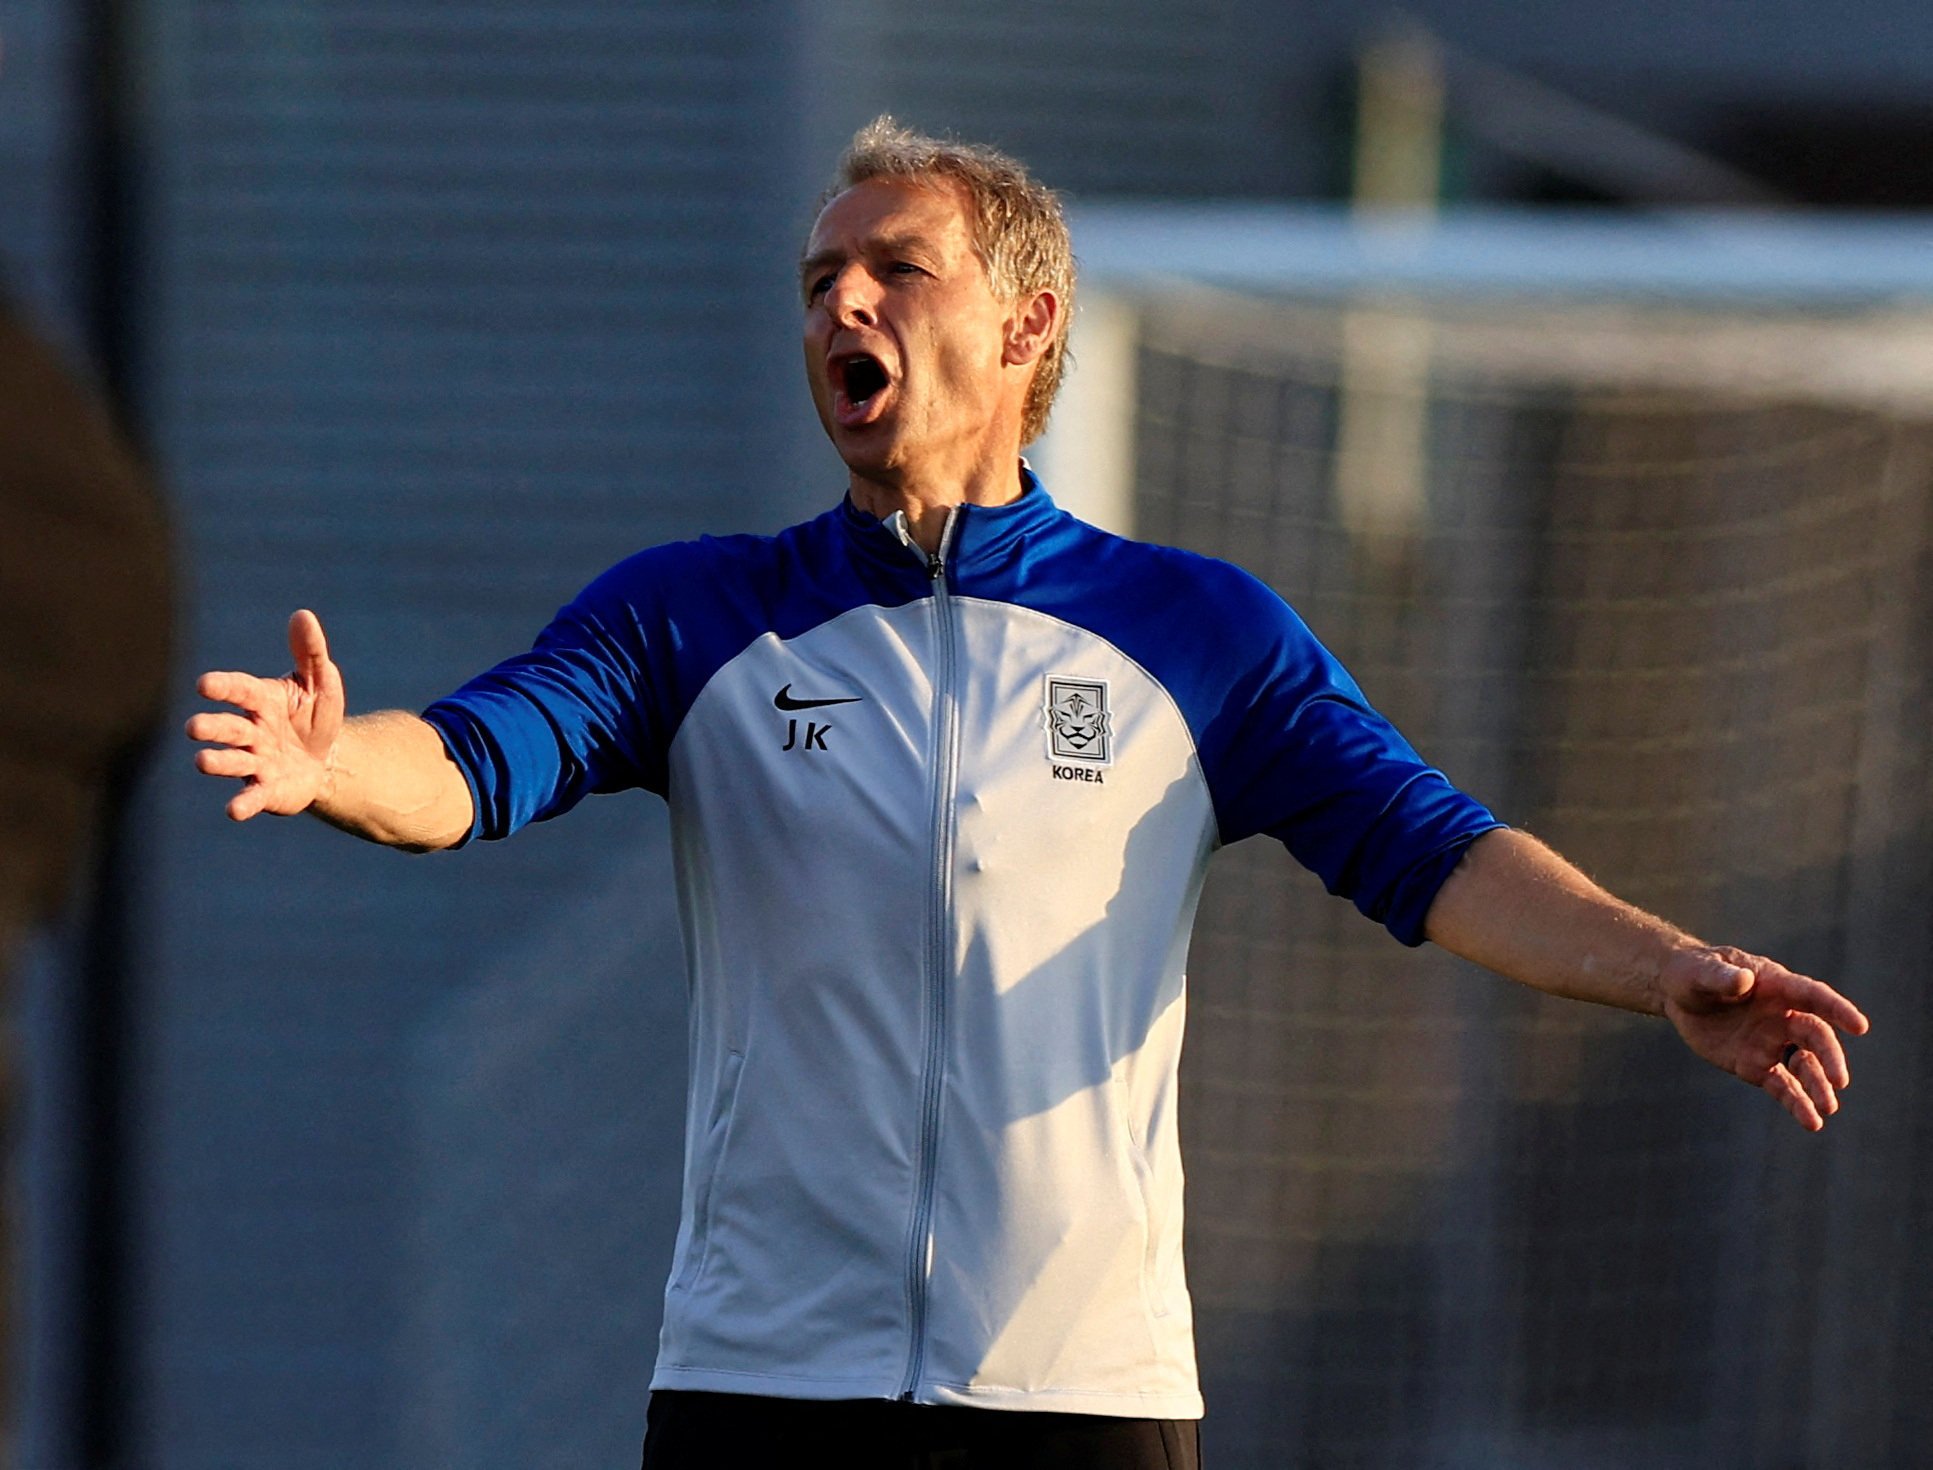 South Korea coach Jurgen Klinsmann reacts to an incident during training at the Asian Cup. Photo: Reuters